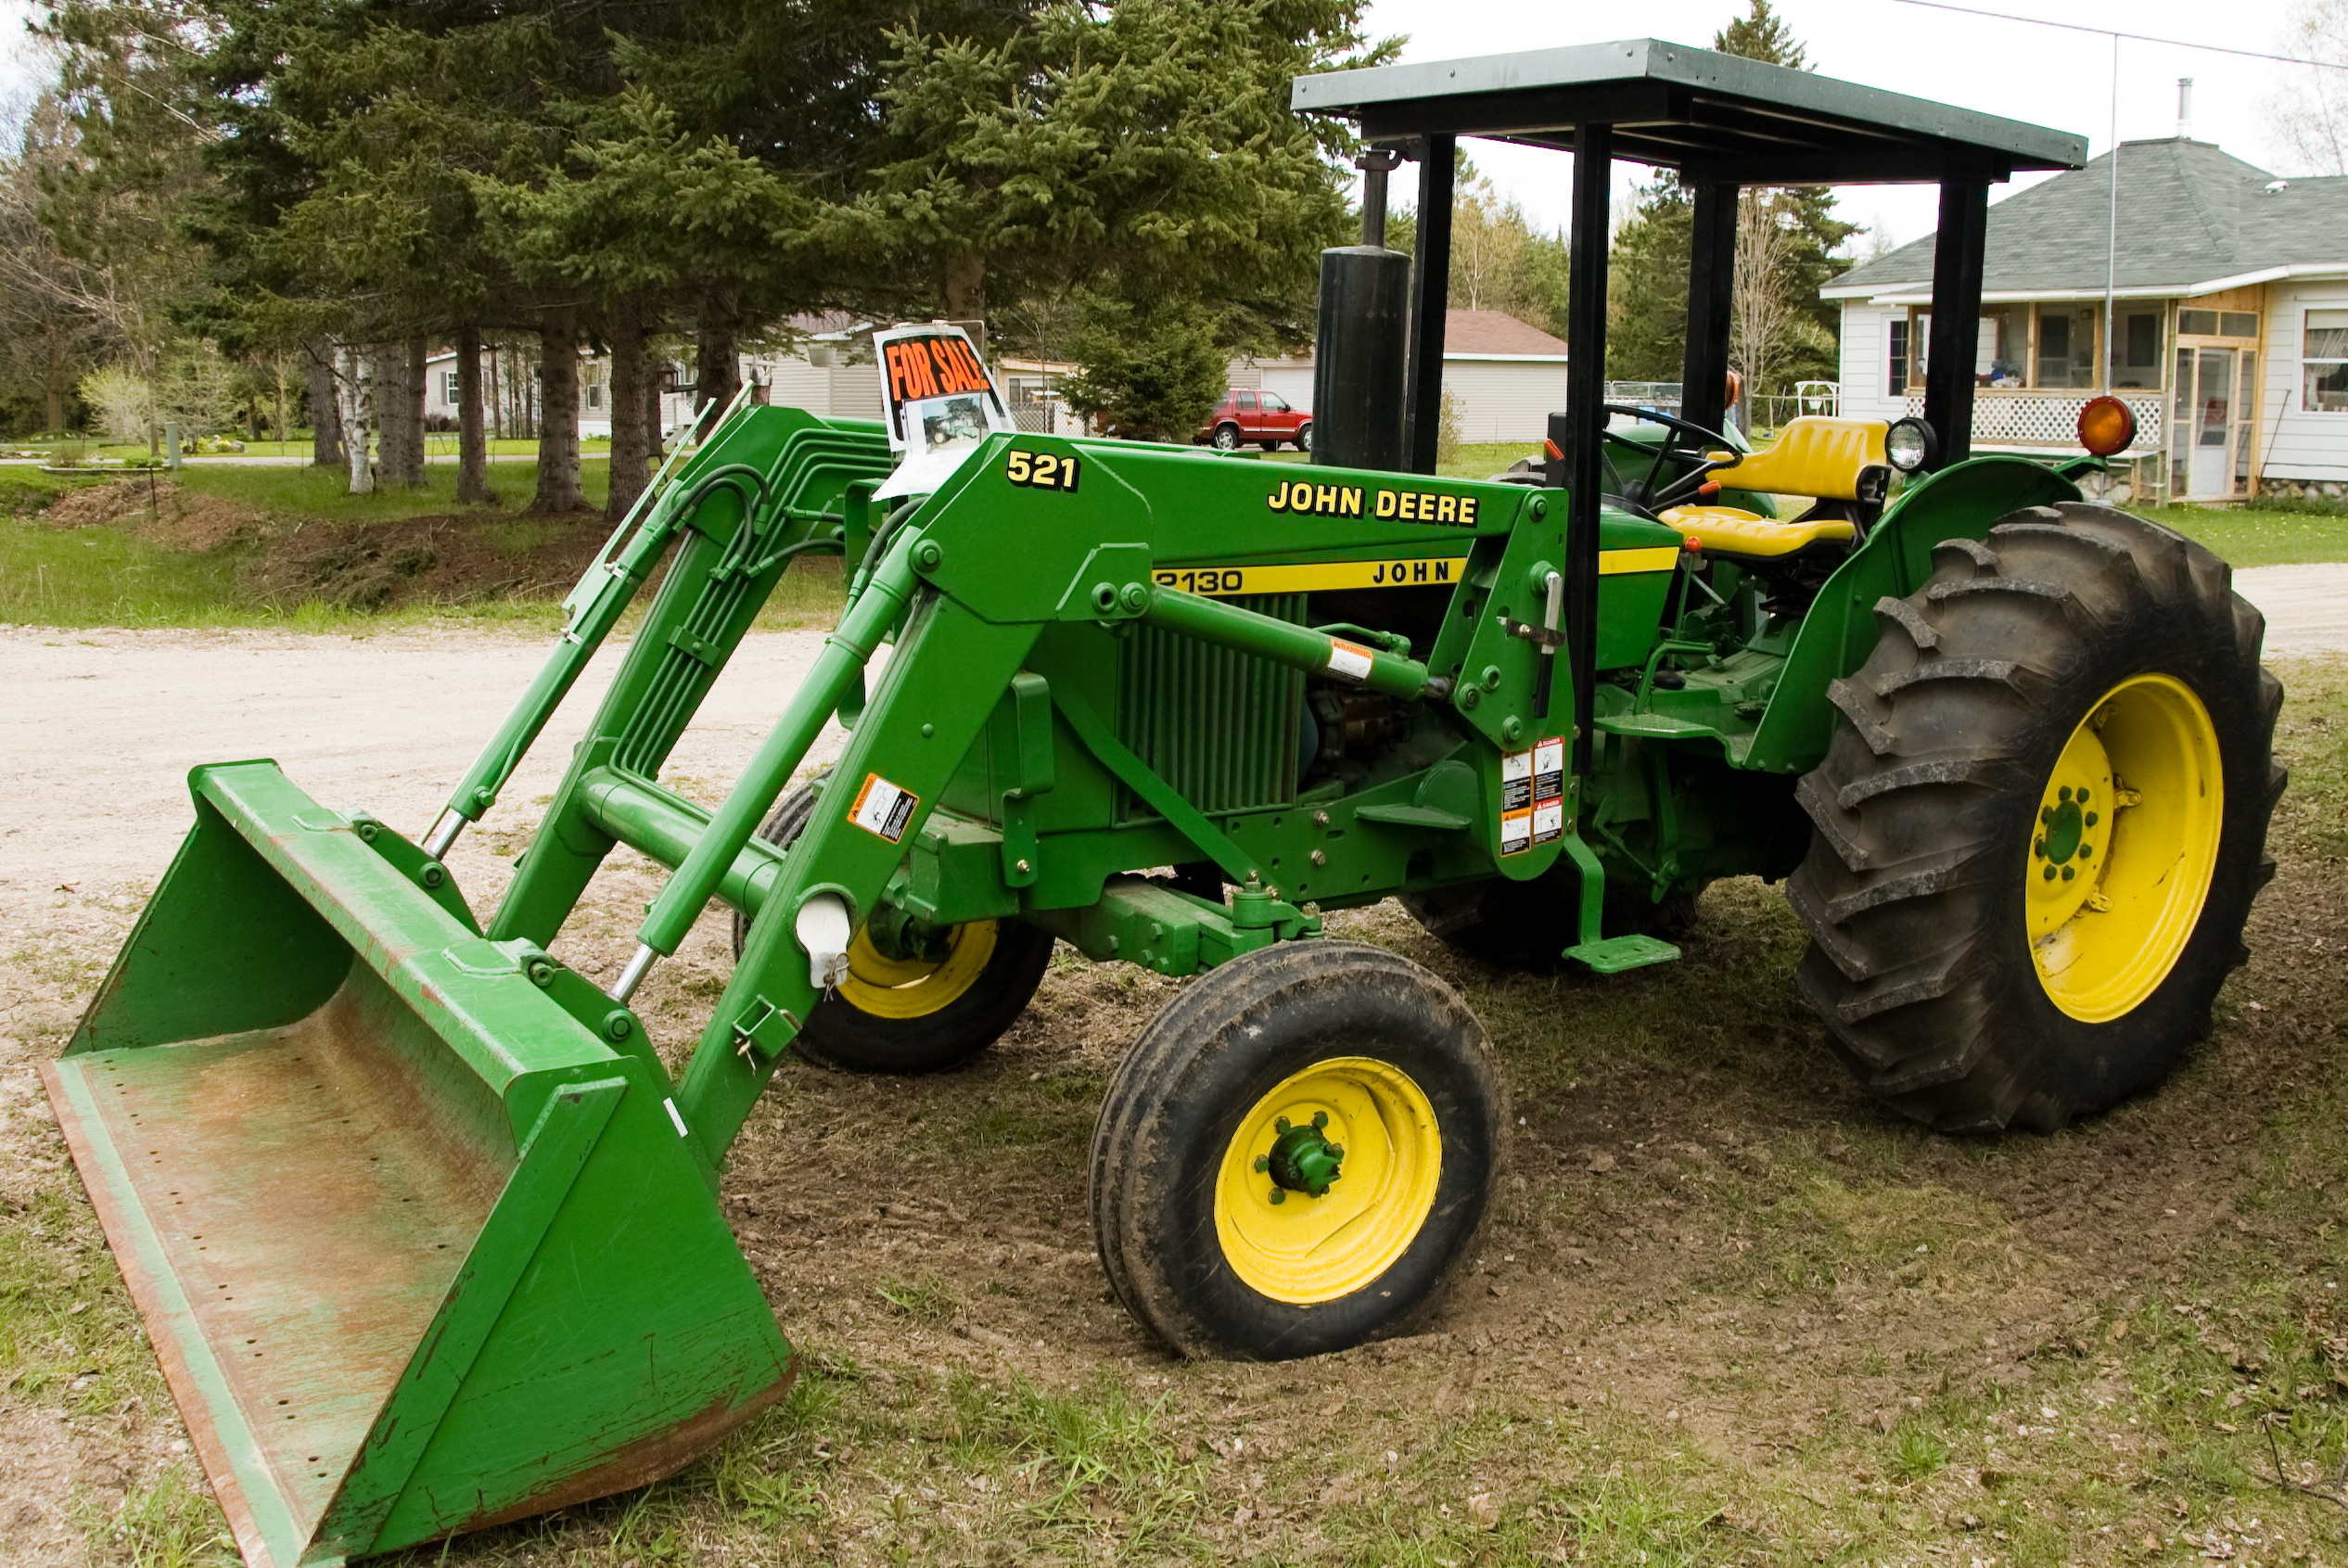 John Deere 2130 Tractor | Flickr - Photo Sharing!